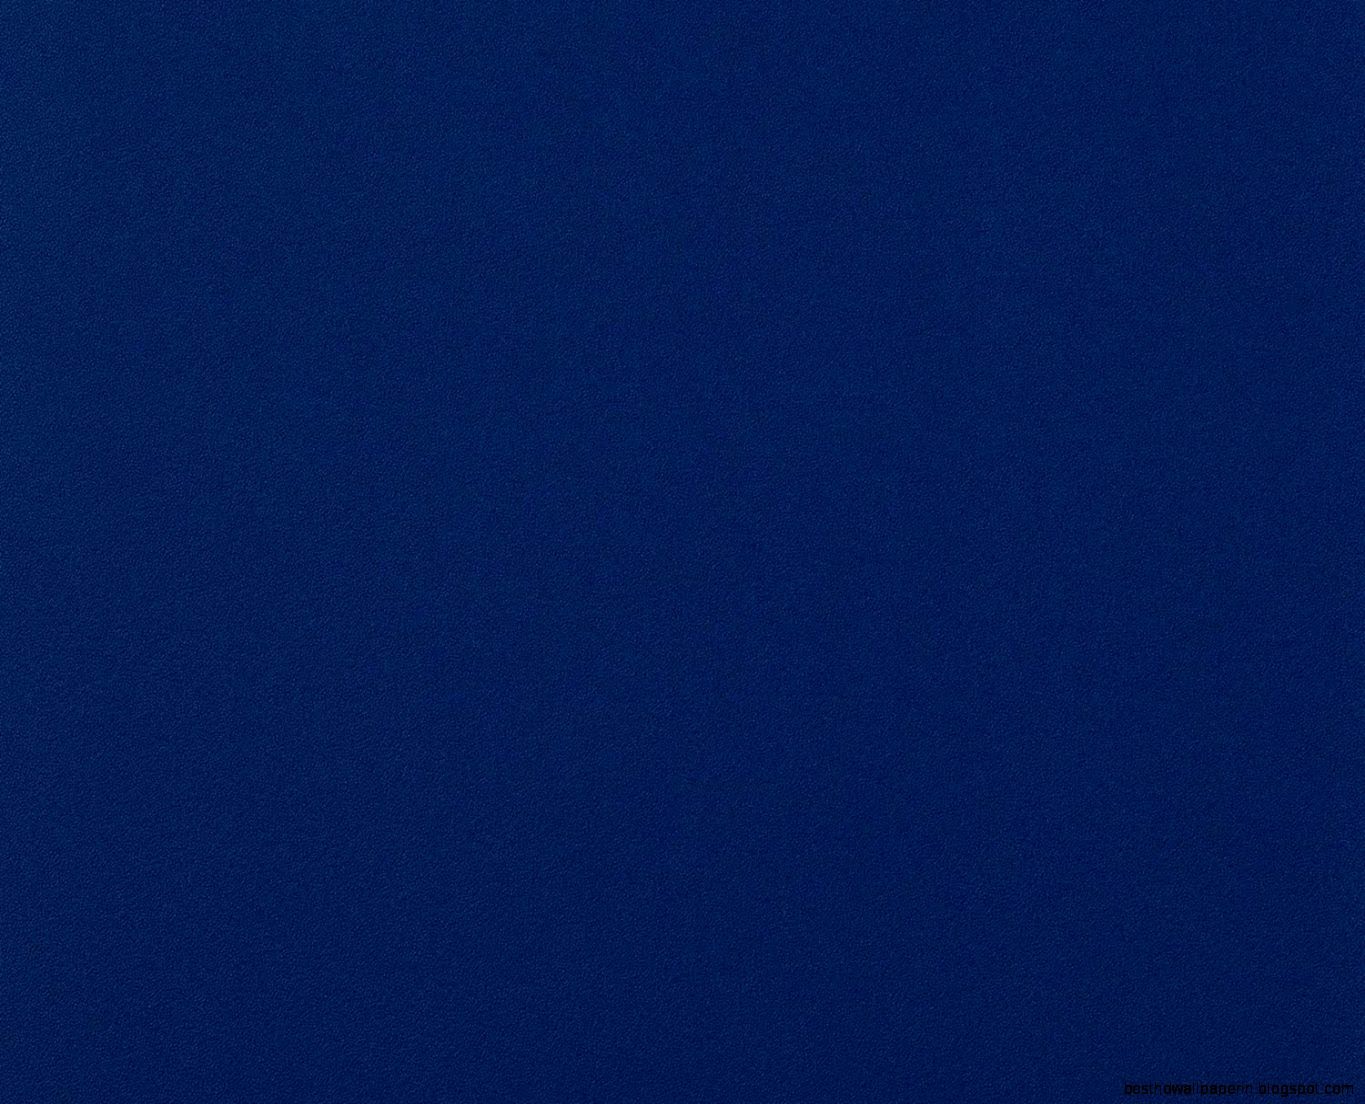 Plain Blue Background Wallpaper - WallpaperSafari